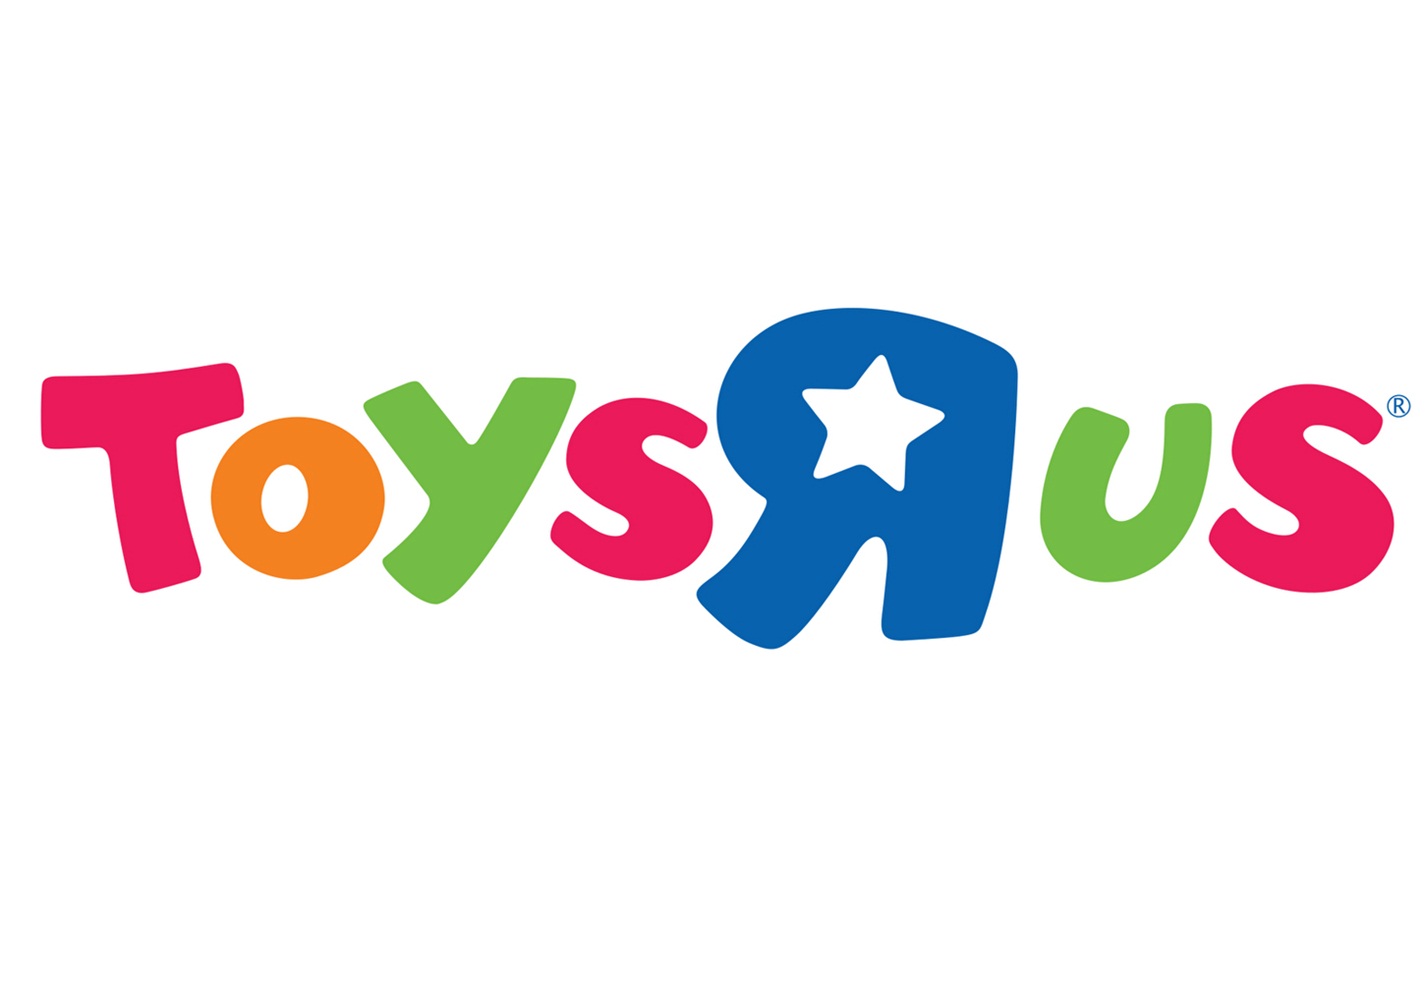 Toys-R-Us-Logo.jpg